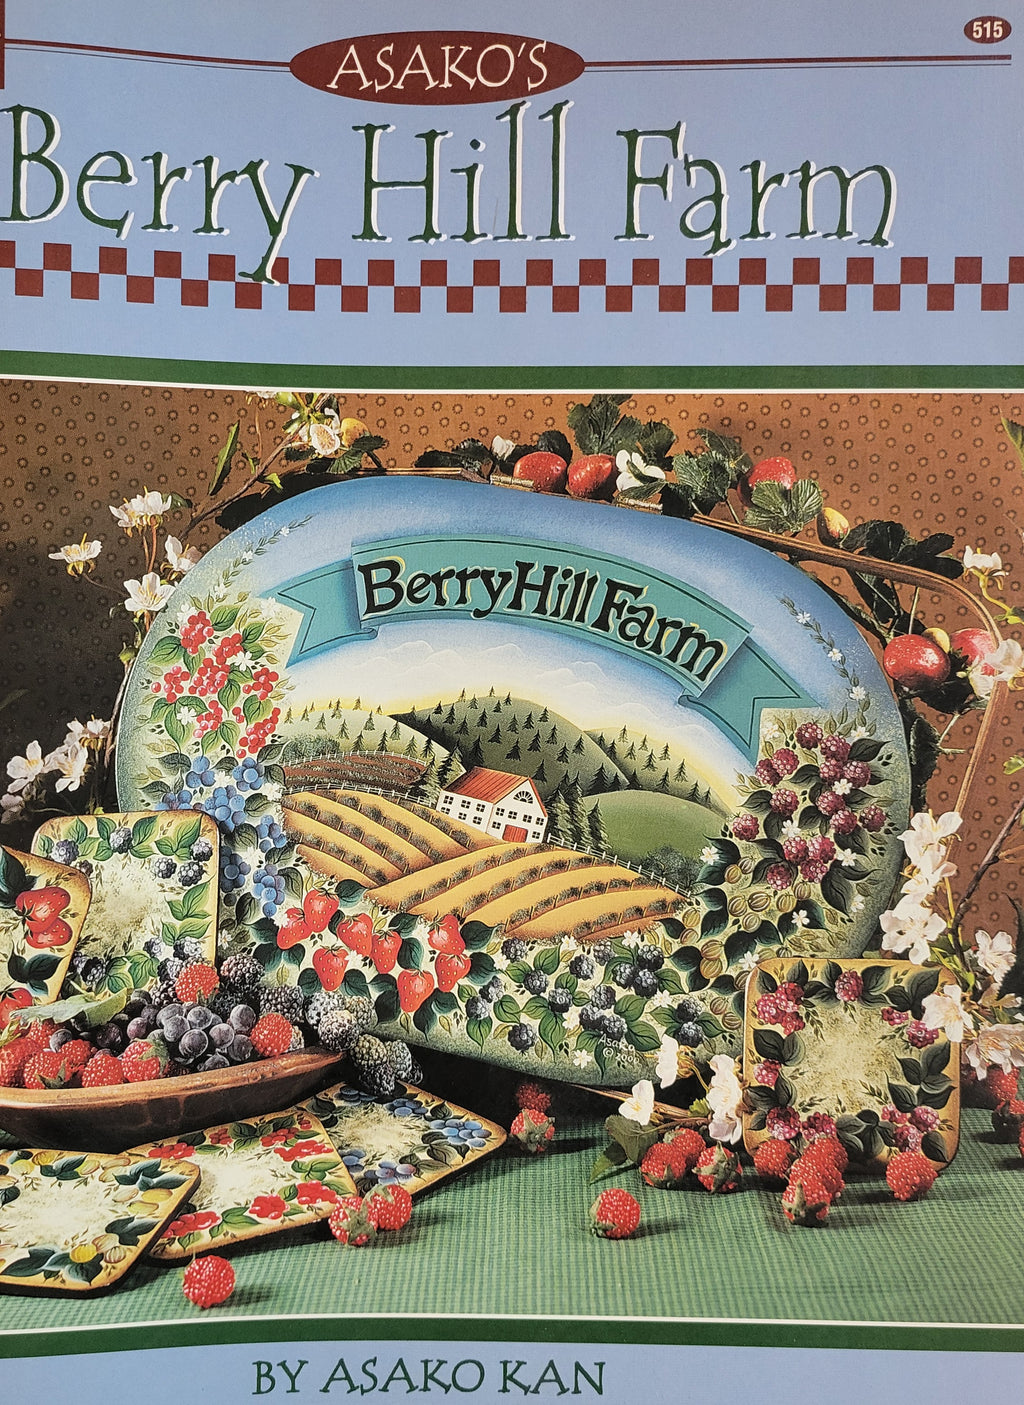 Berry Hill Farm by Asako Kan